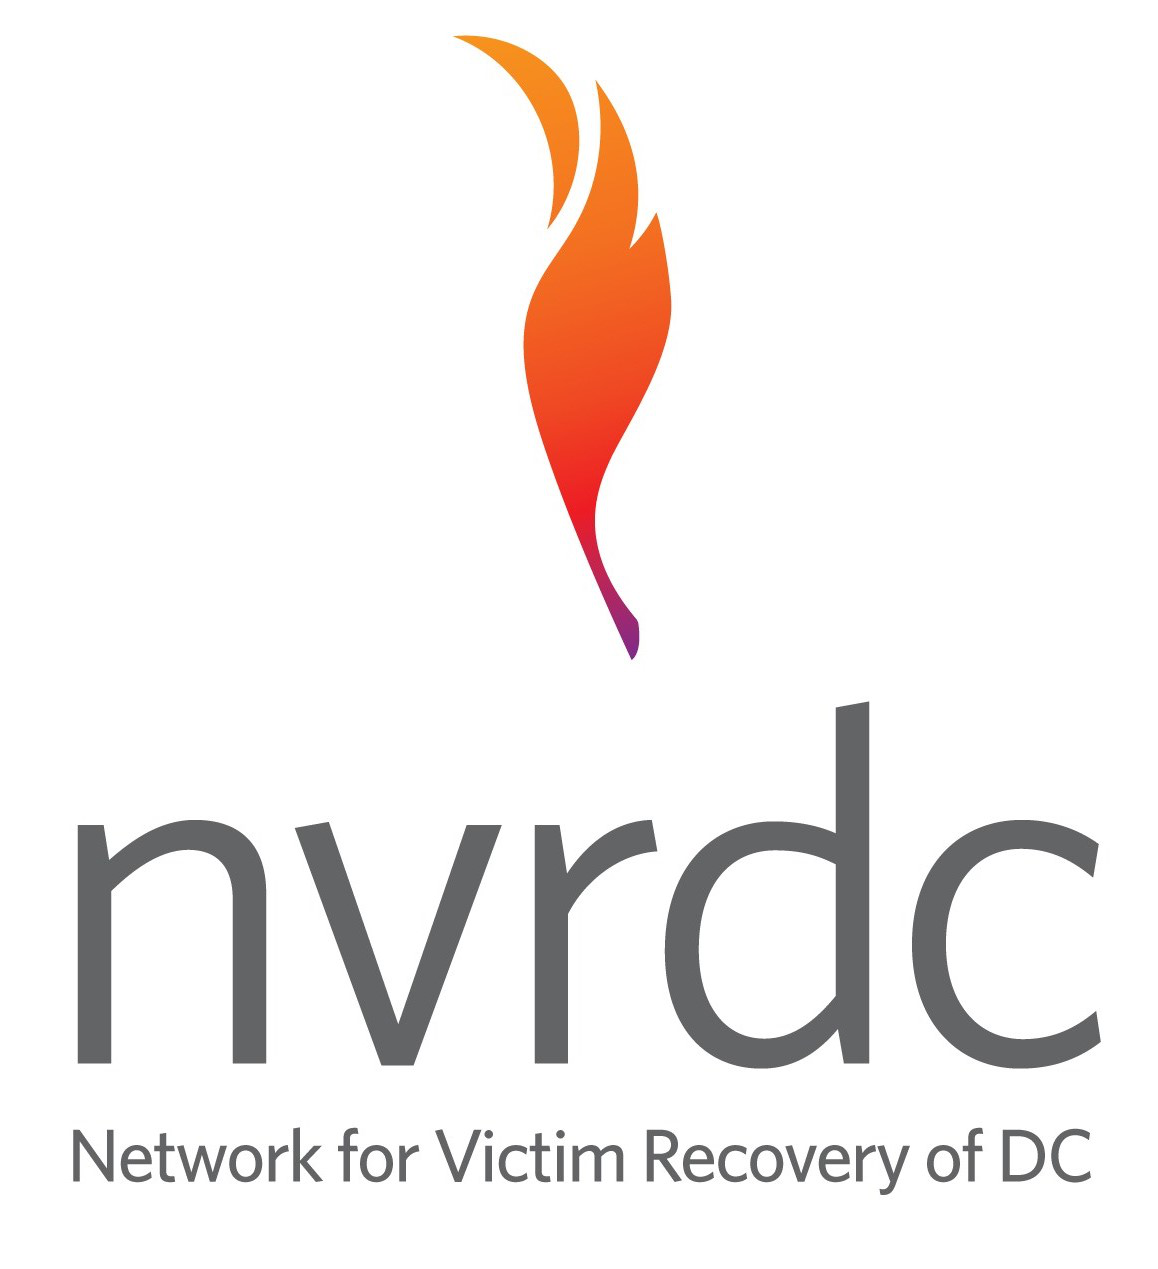 NVRDC logo